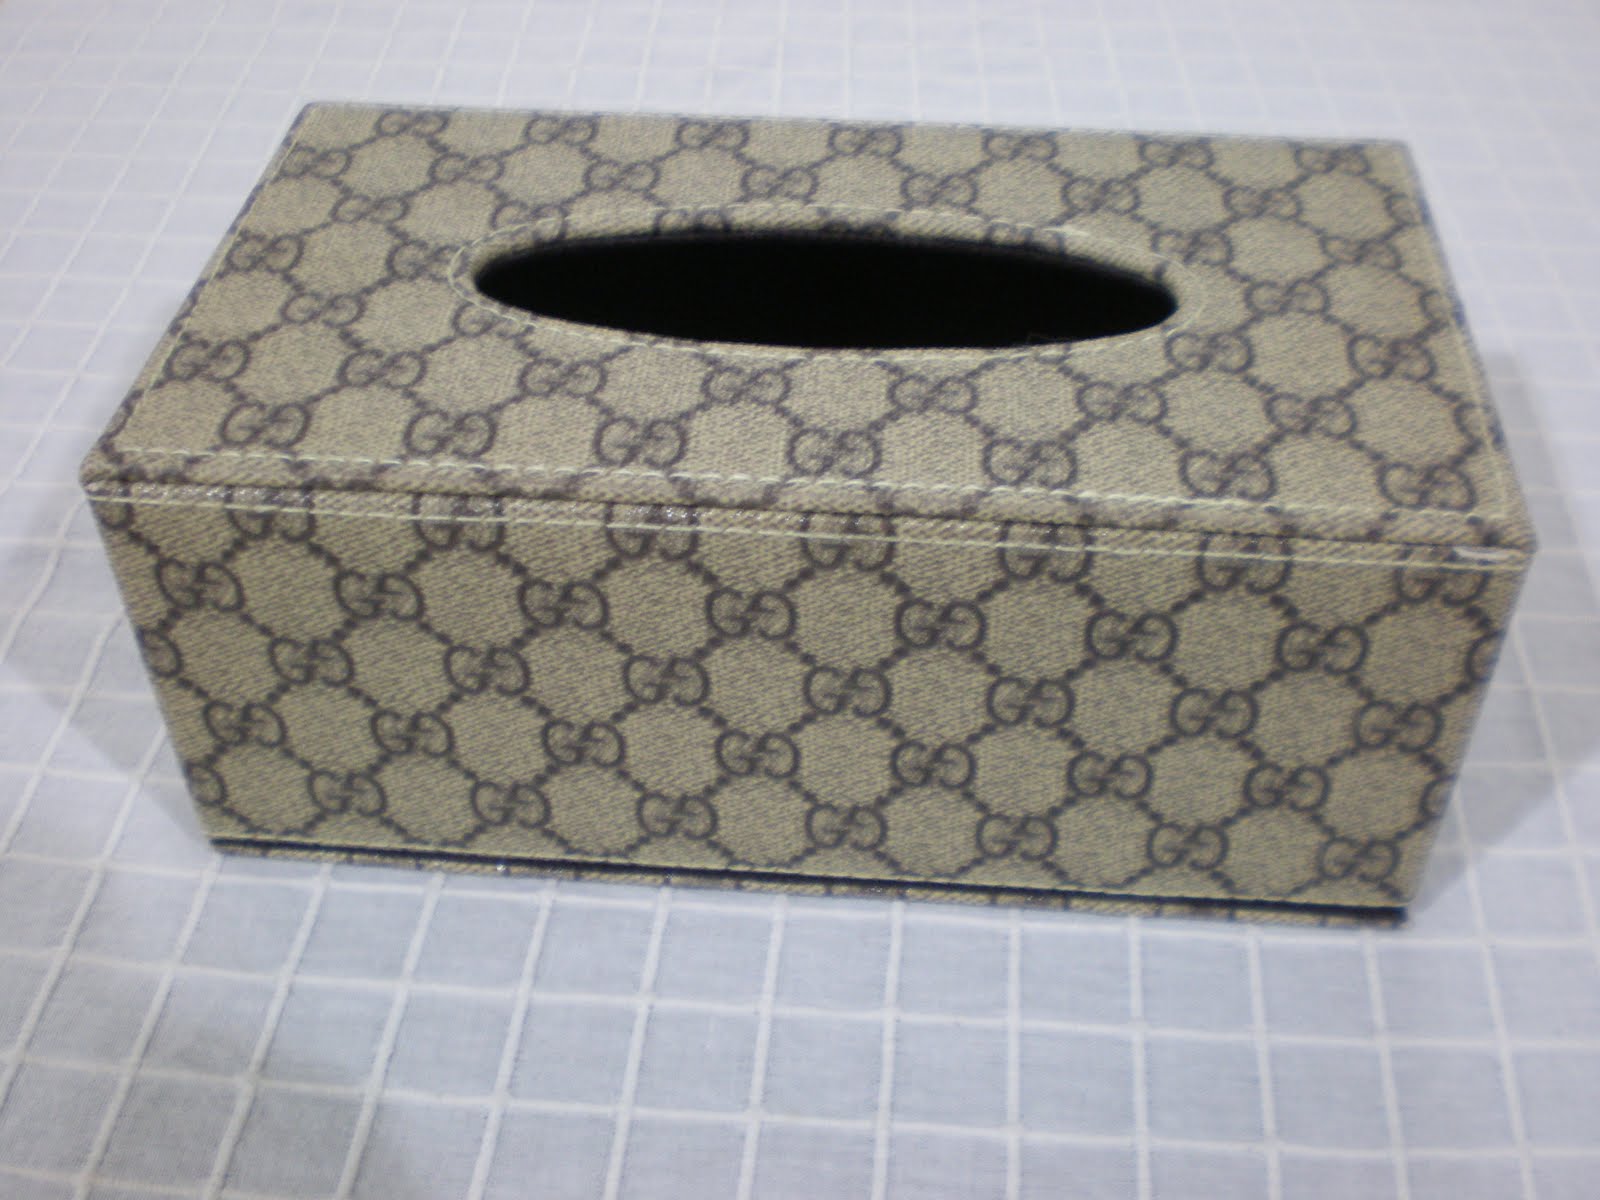 Handbags Galore: Latest Stock #2.2 Tissue Boxes